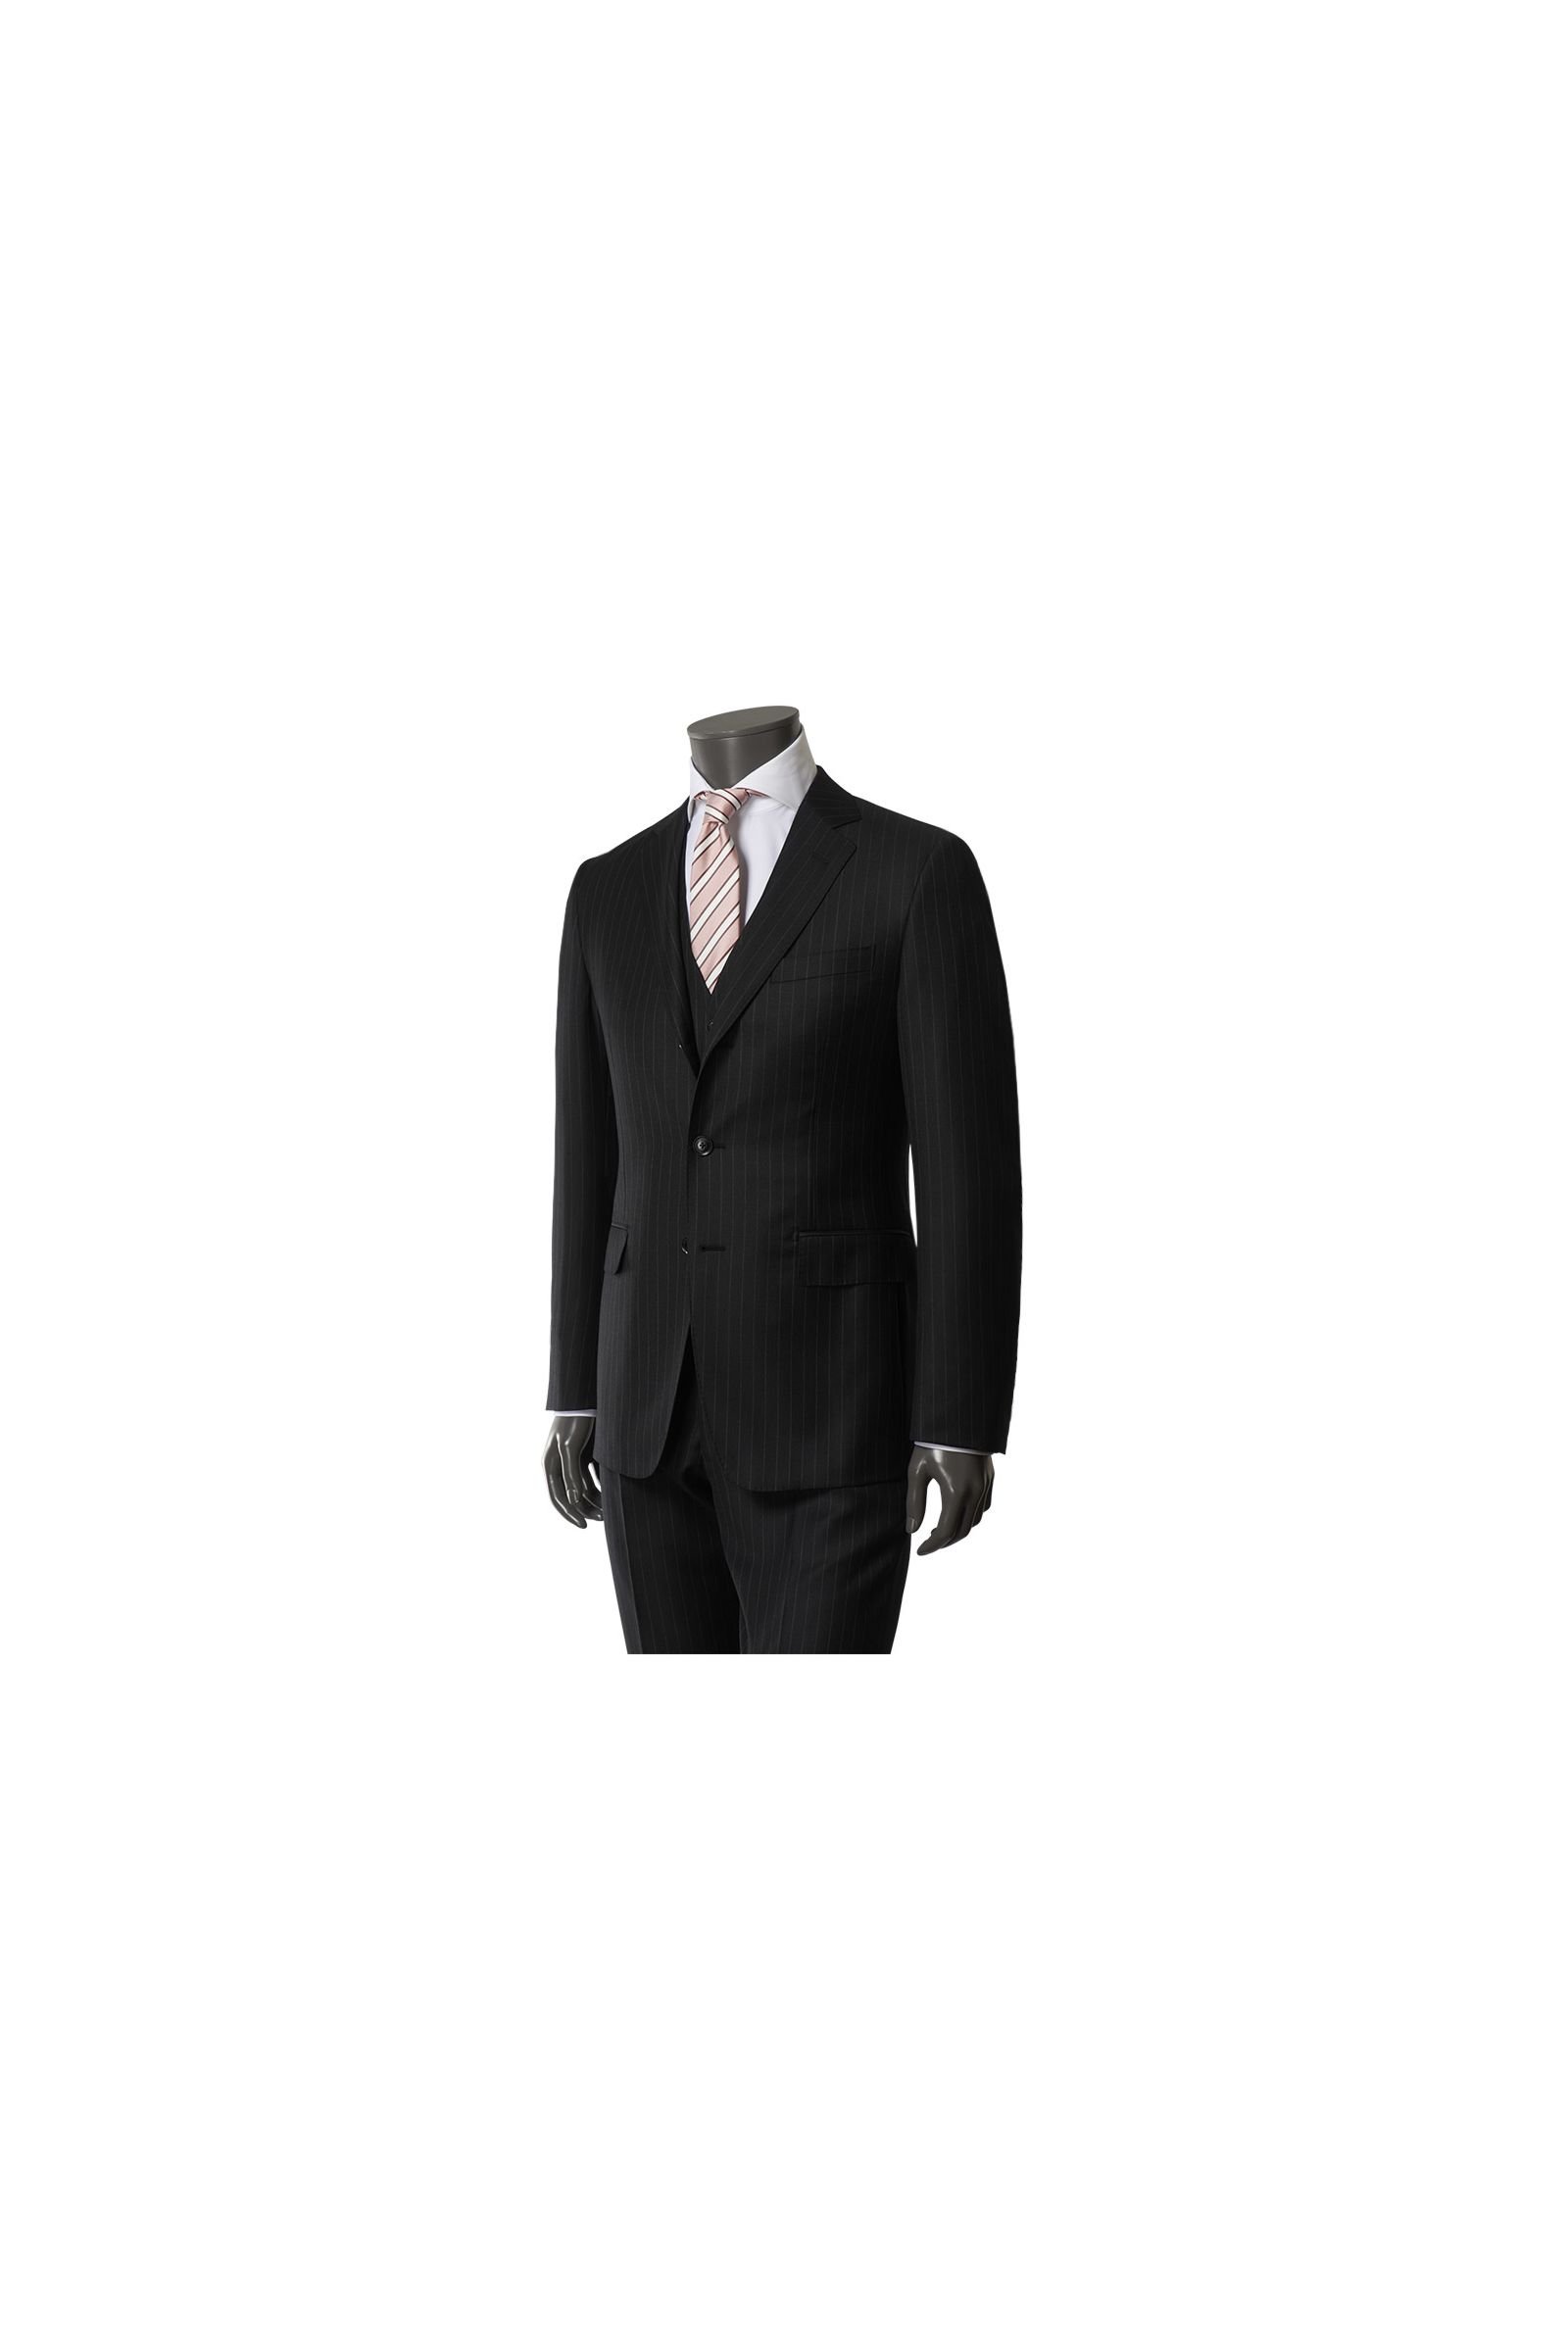 Suit with waistcoat black